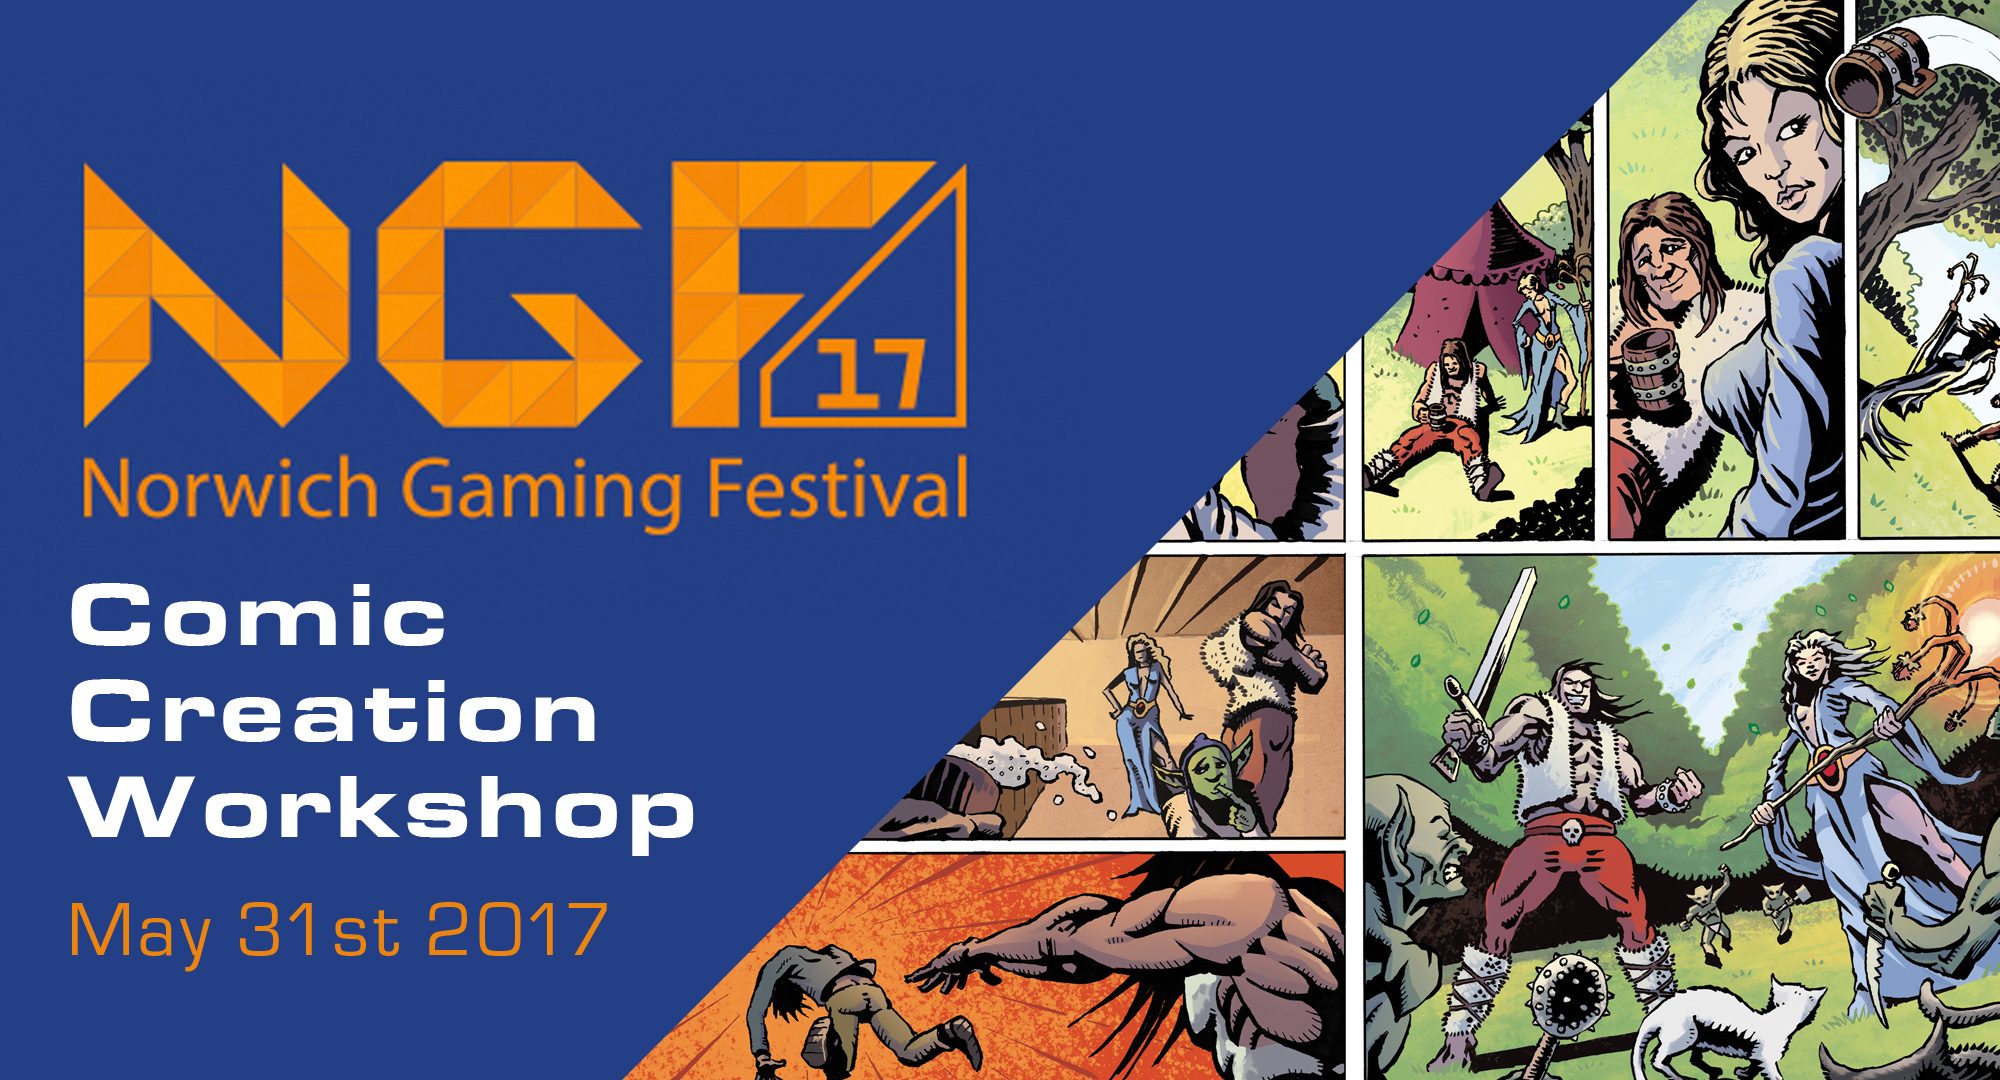 Norwich Gaming Festival Comic workshop